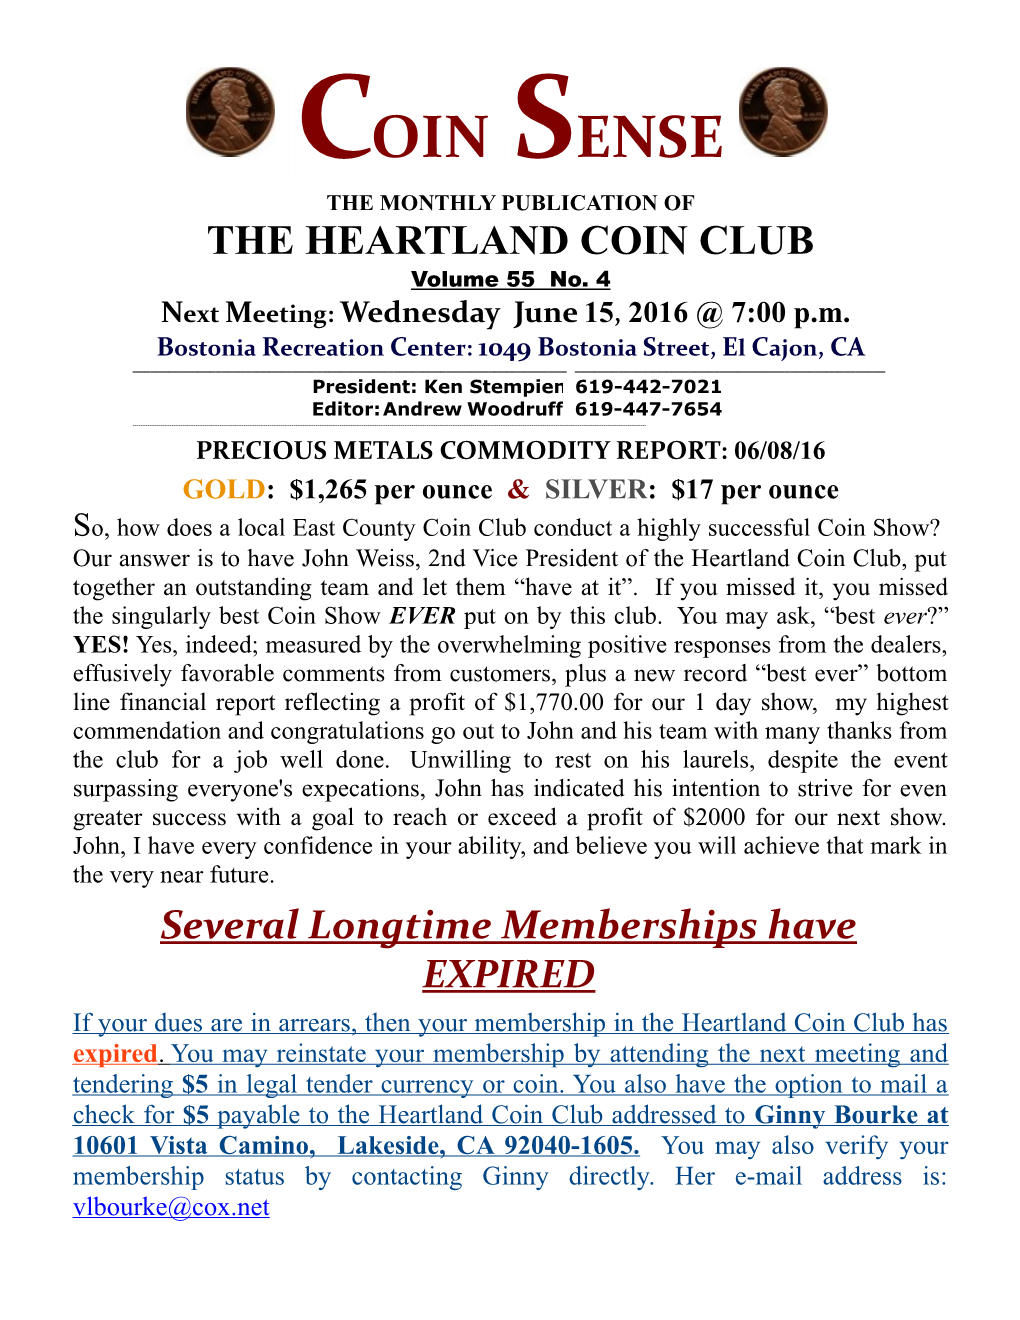 The Heartland Coin Club